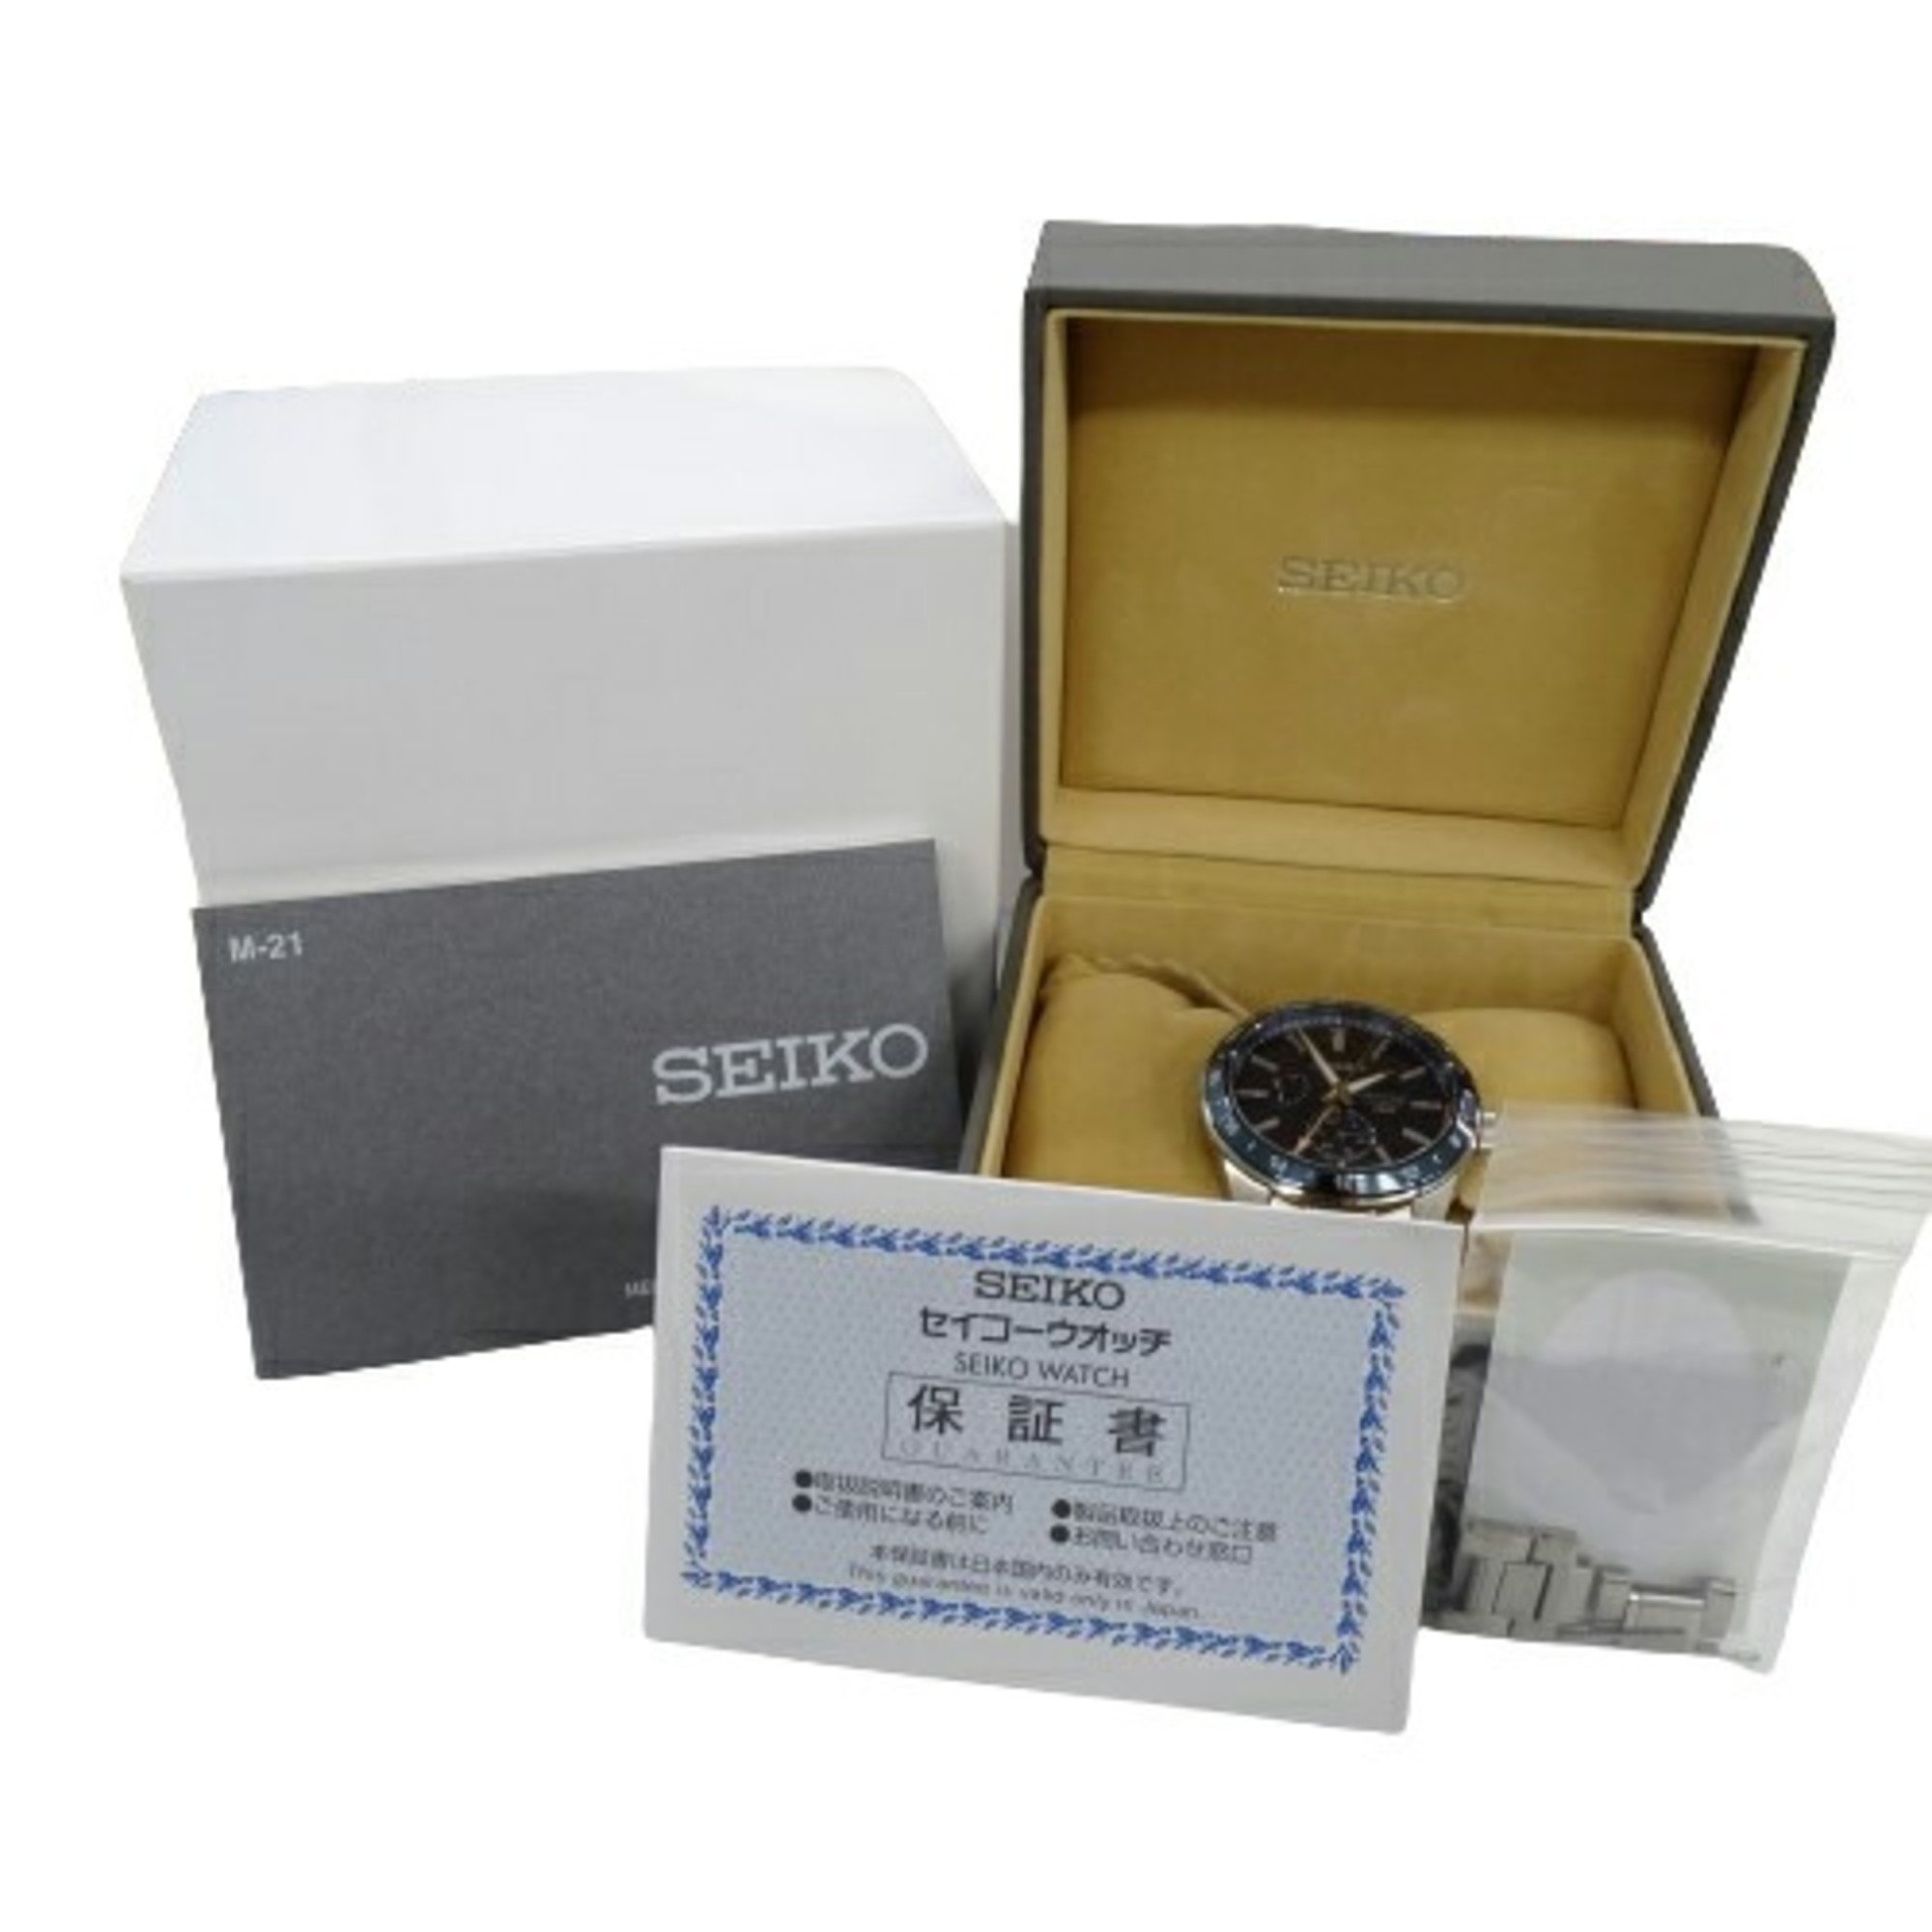 SEIKO Presage 6R64-00C0 SARF007 Watch Men's Brand Sharp Edge GMT ...